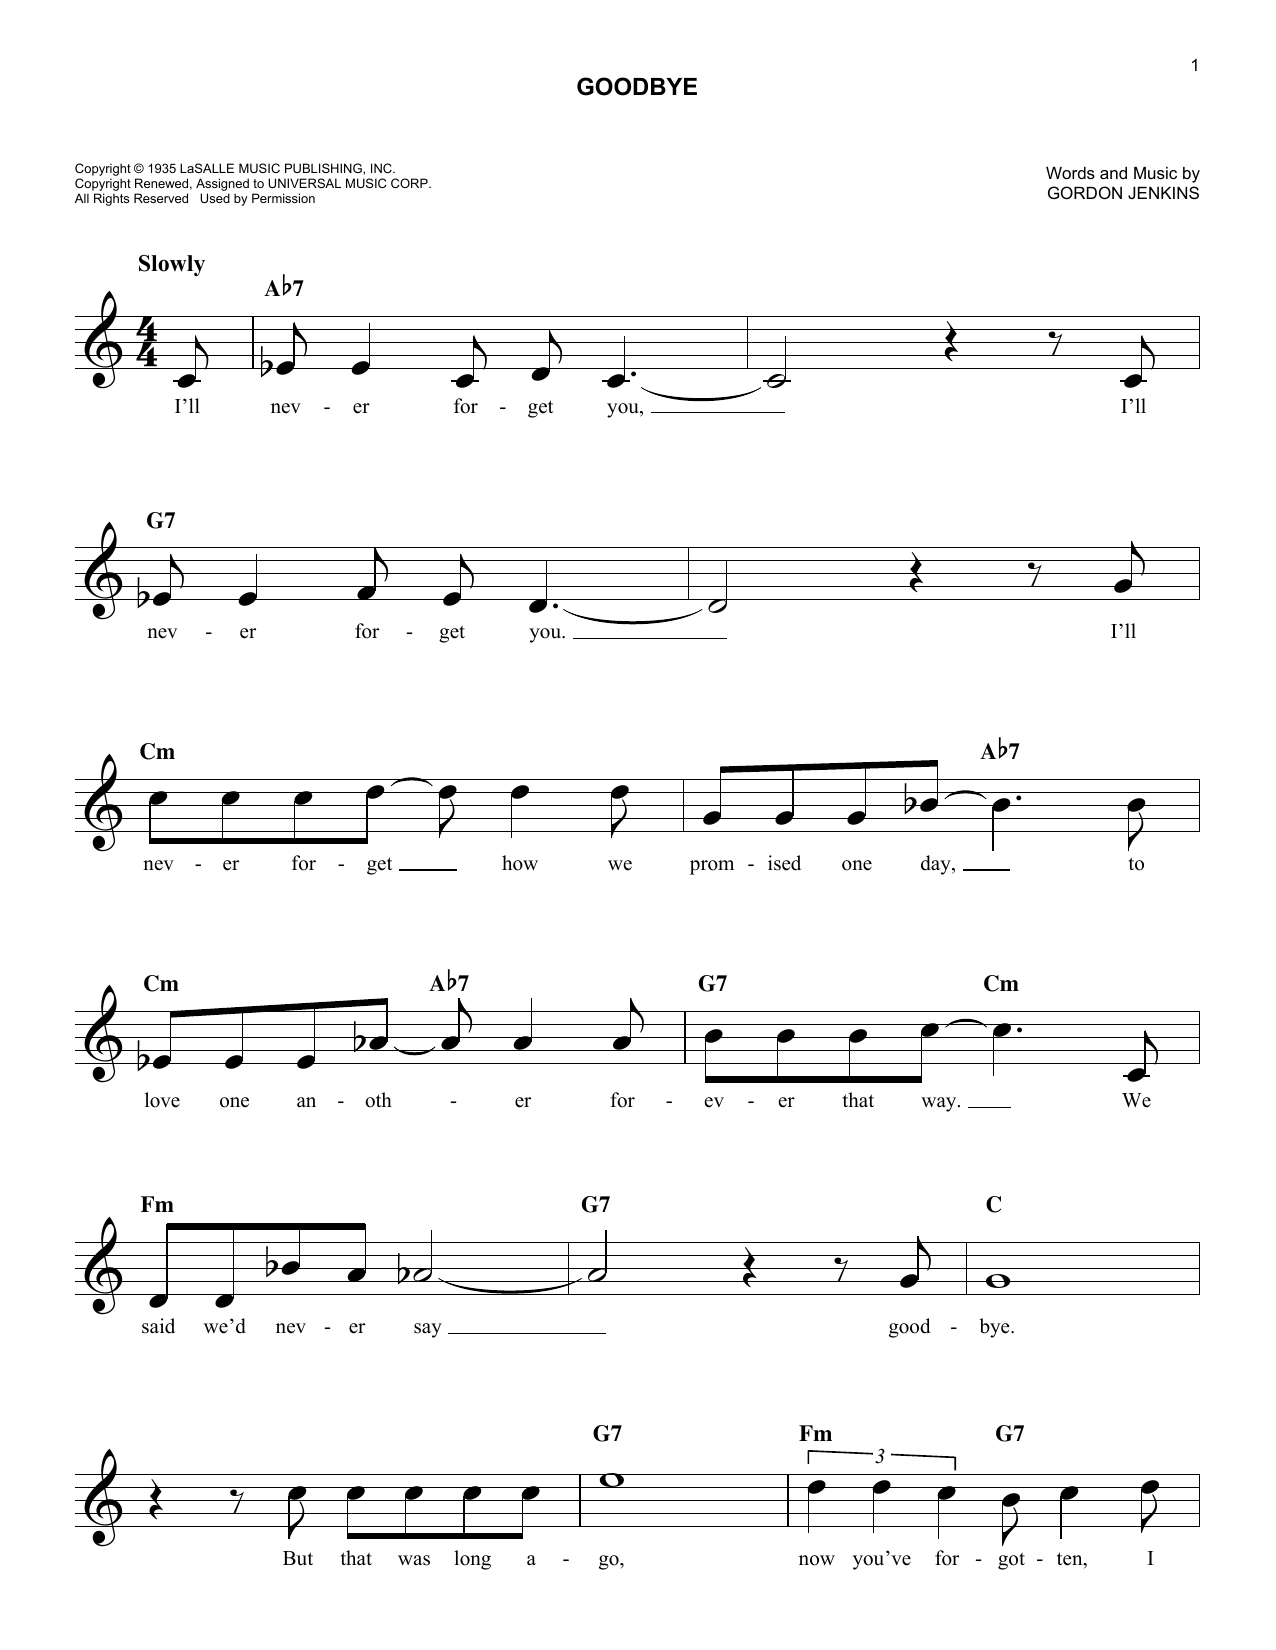 Gordon Jenkins Goodbye Sheet Music Notes & Chords for Clarinet - Download or Print PDF